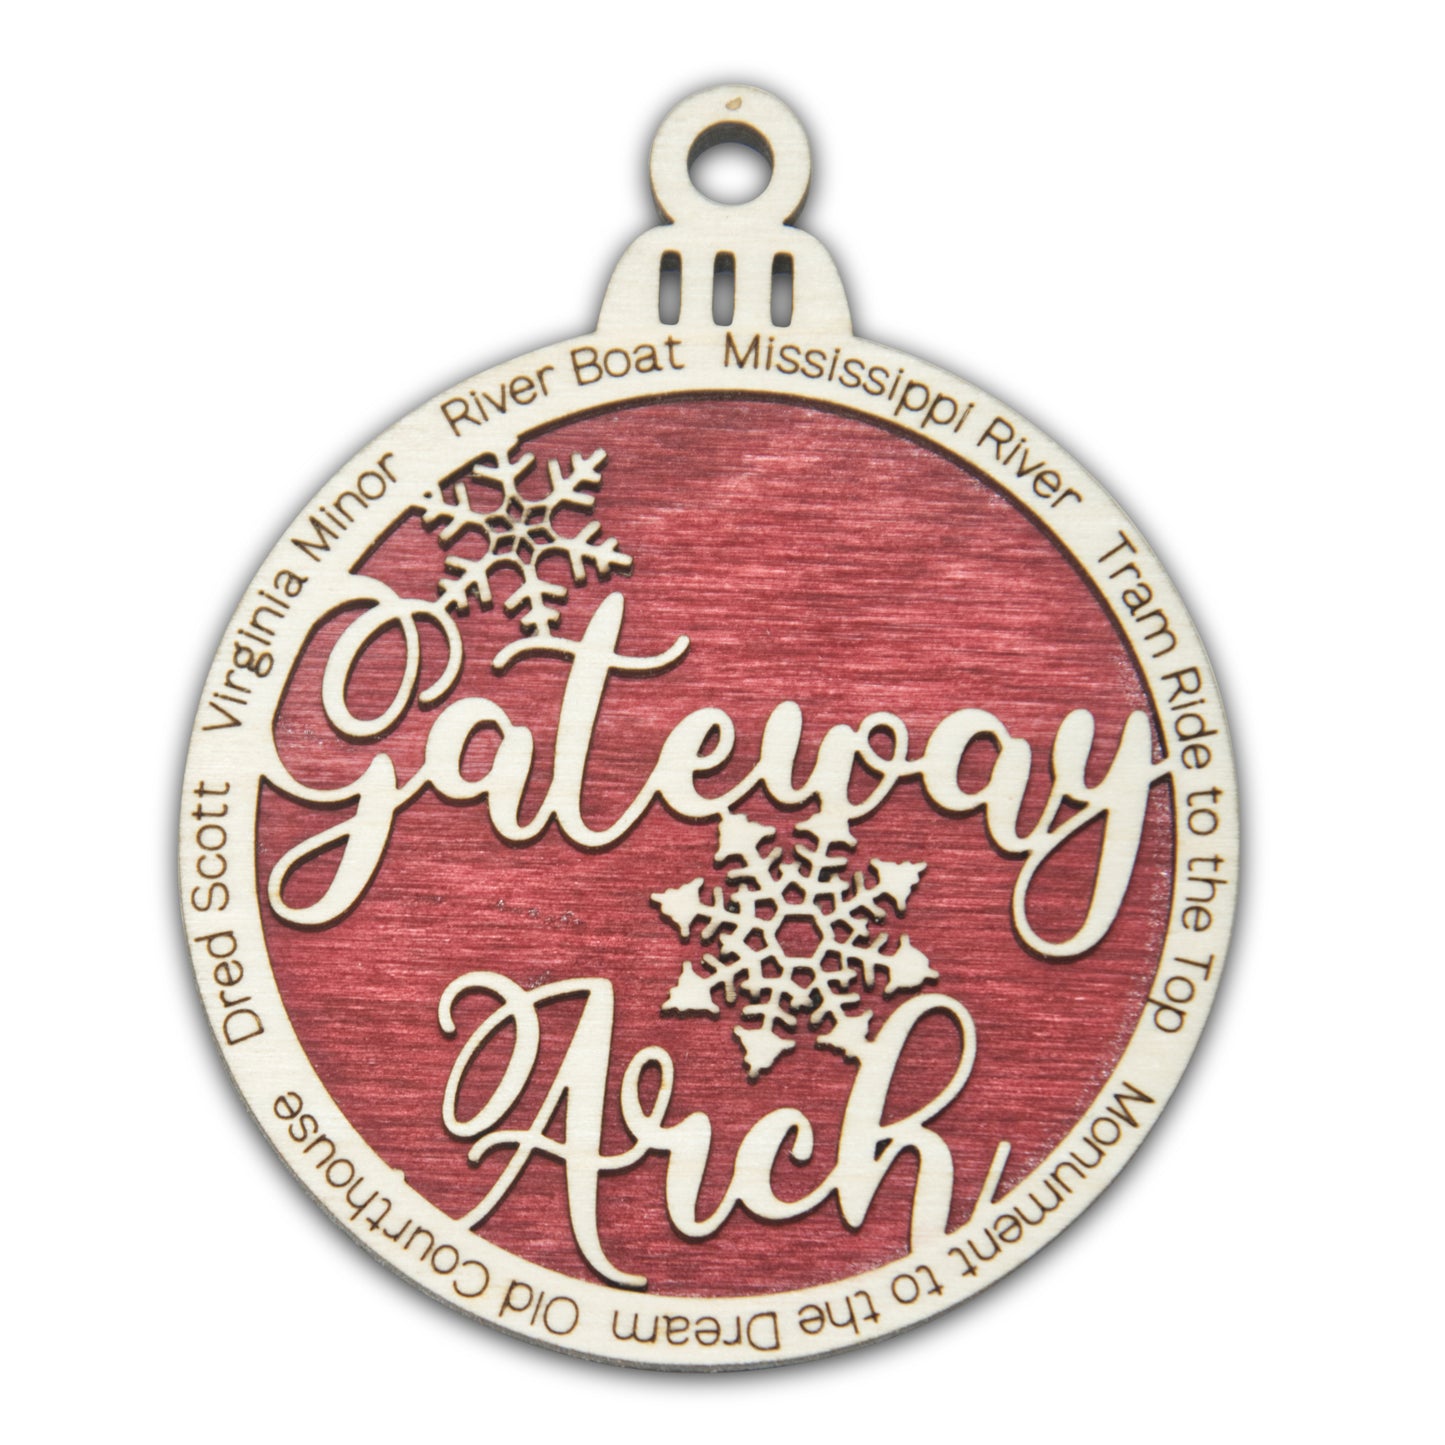 Gateway Arch National Park Christmas Ornament